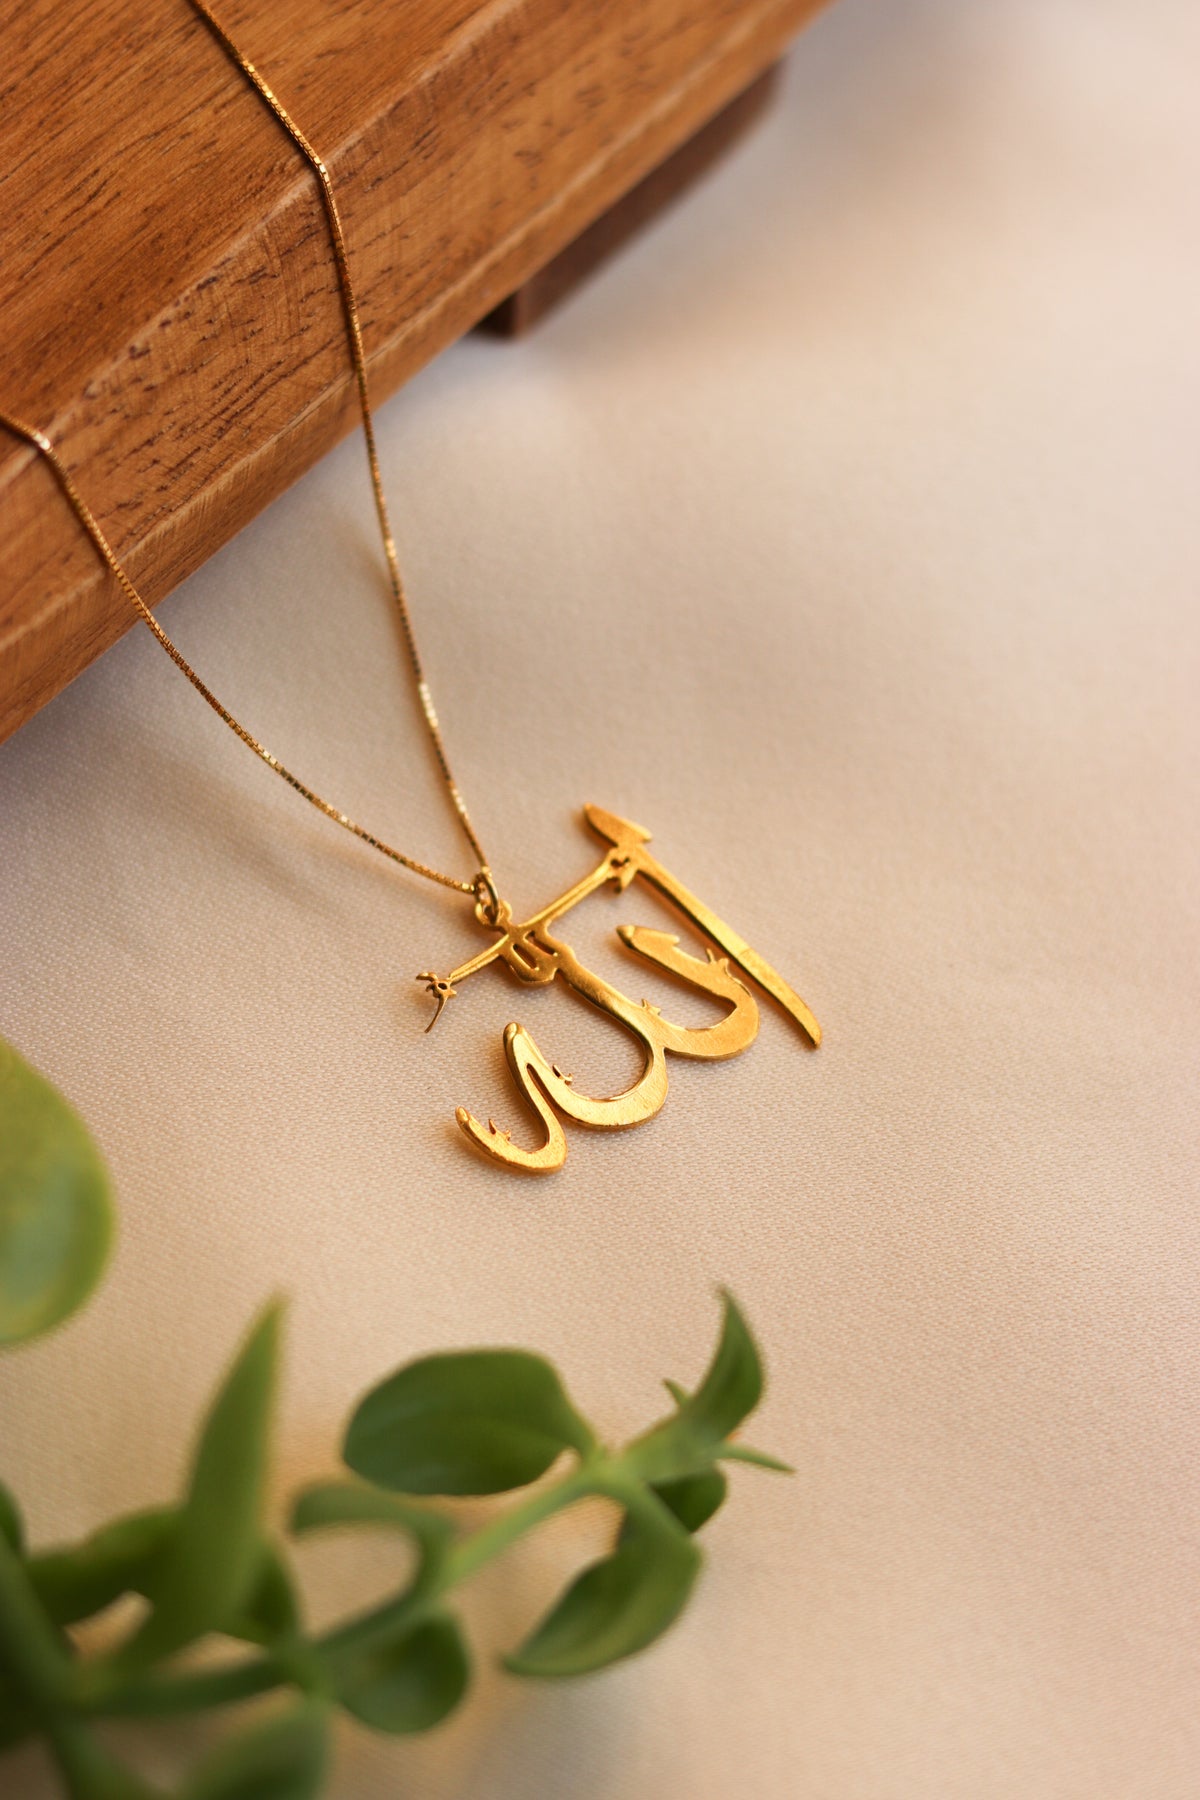 "الله" Necklace